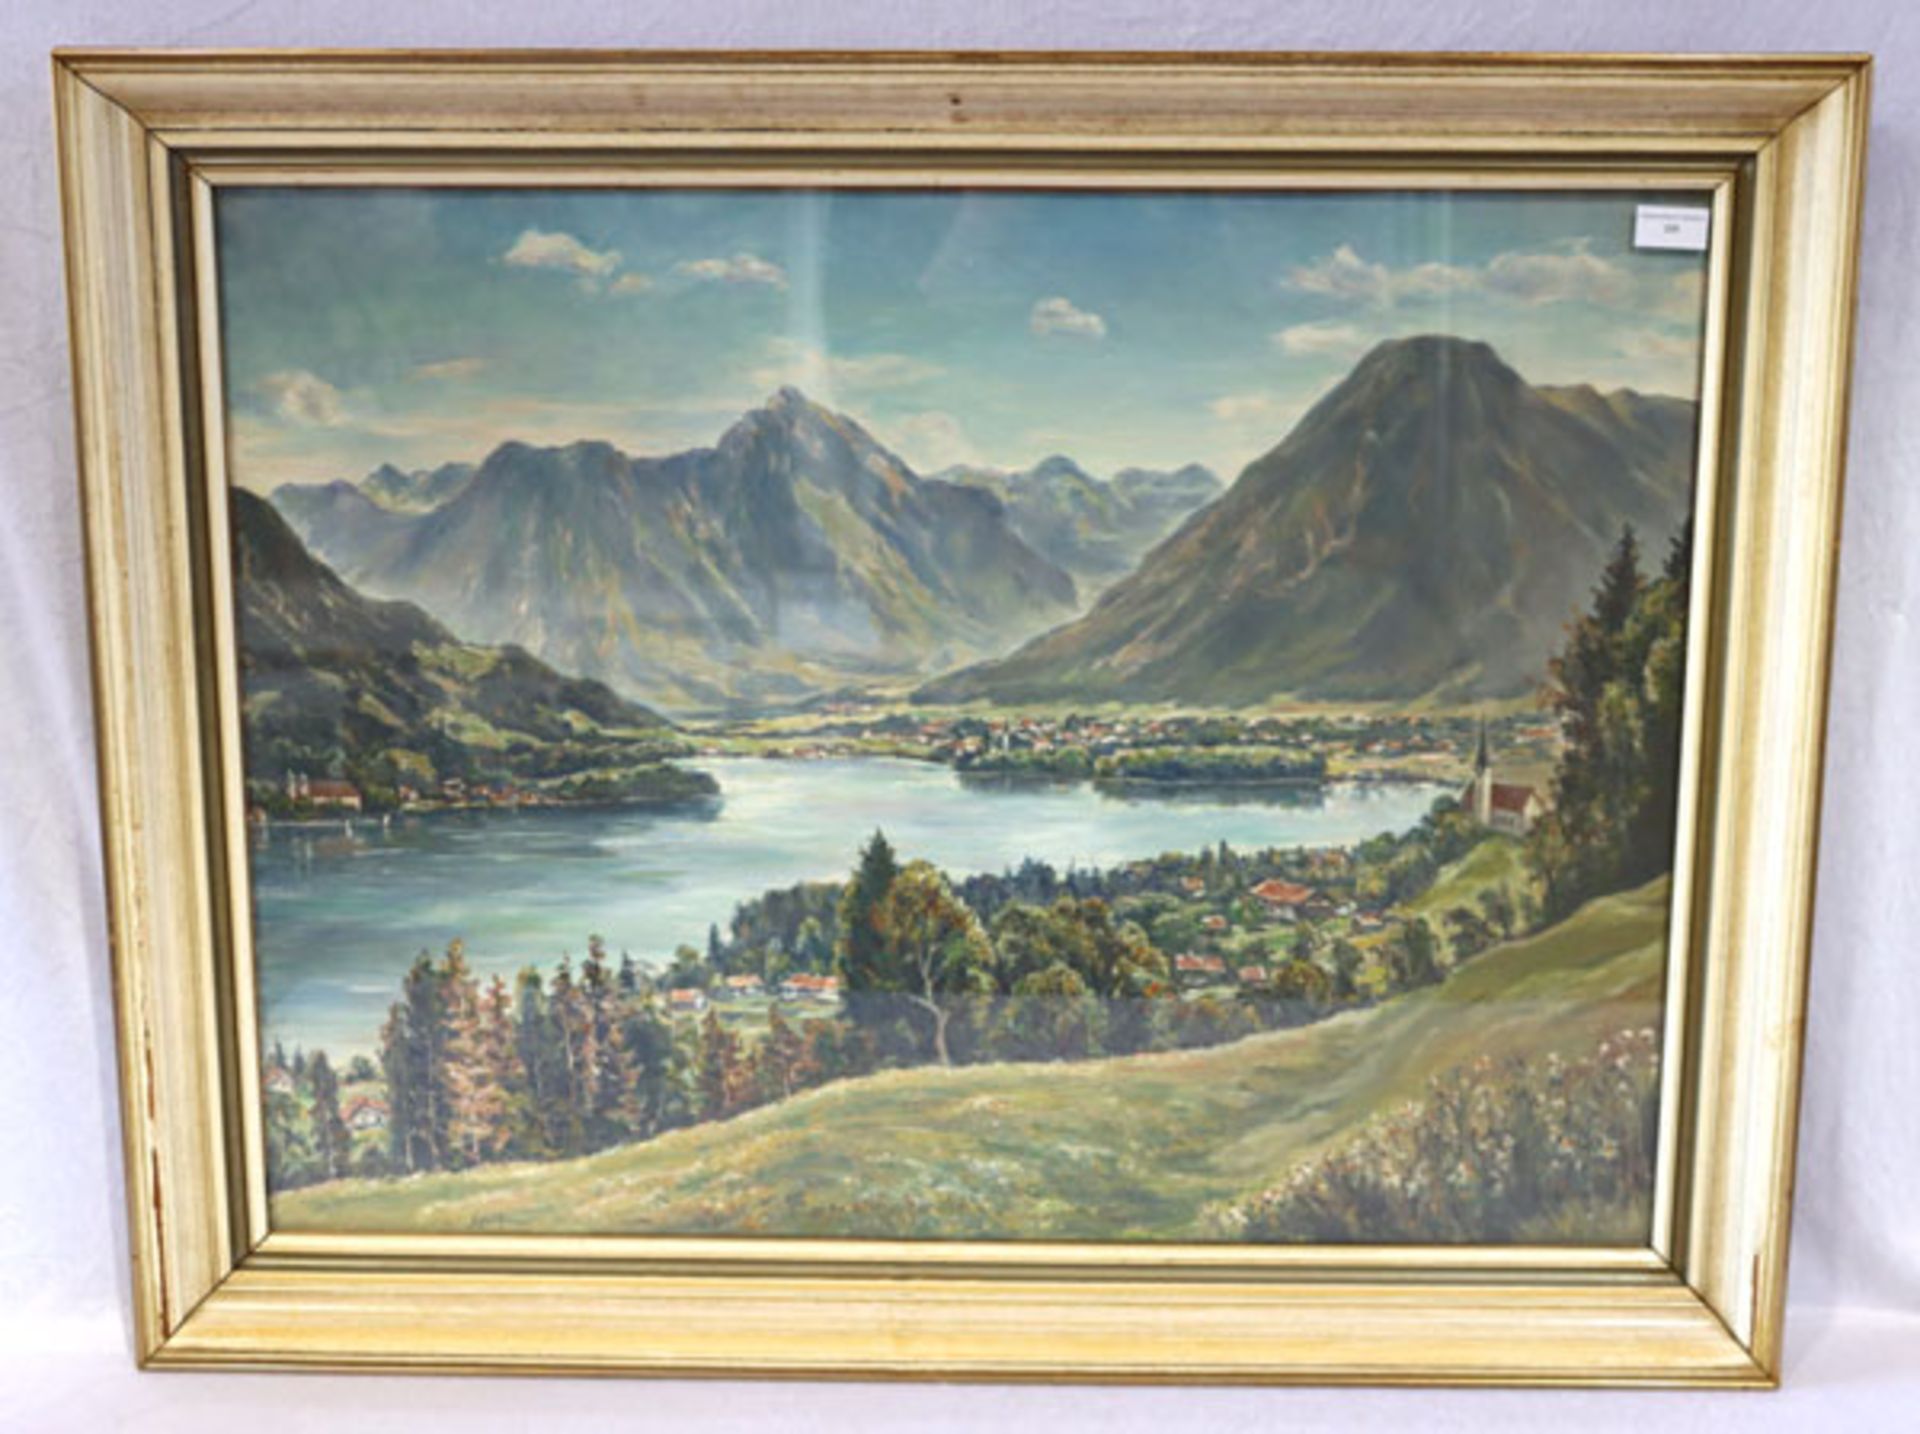 Gemälde ÖL/LW 'Blick auf den Tegernsee', signiert Spethmann, Albert Spethmann, * 1894 Hamburg + 1985